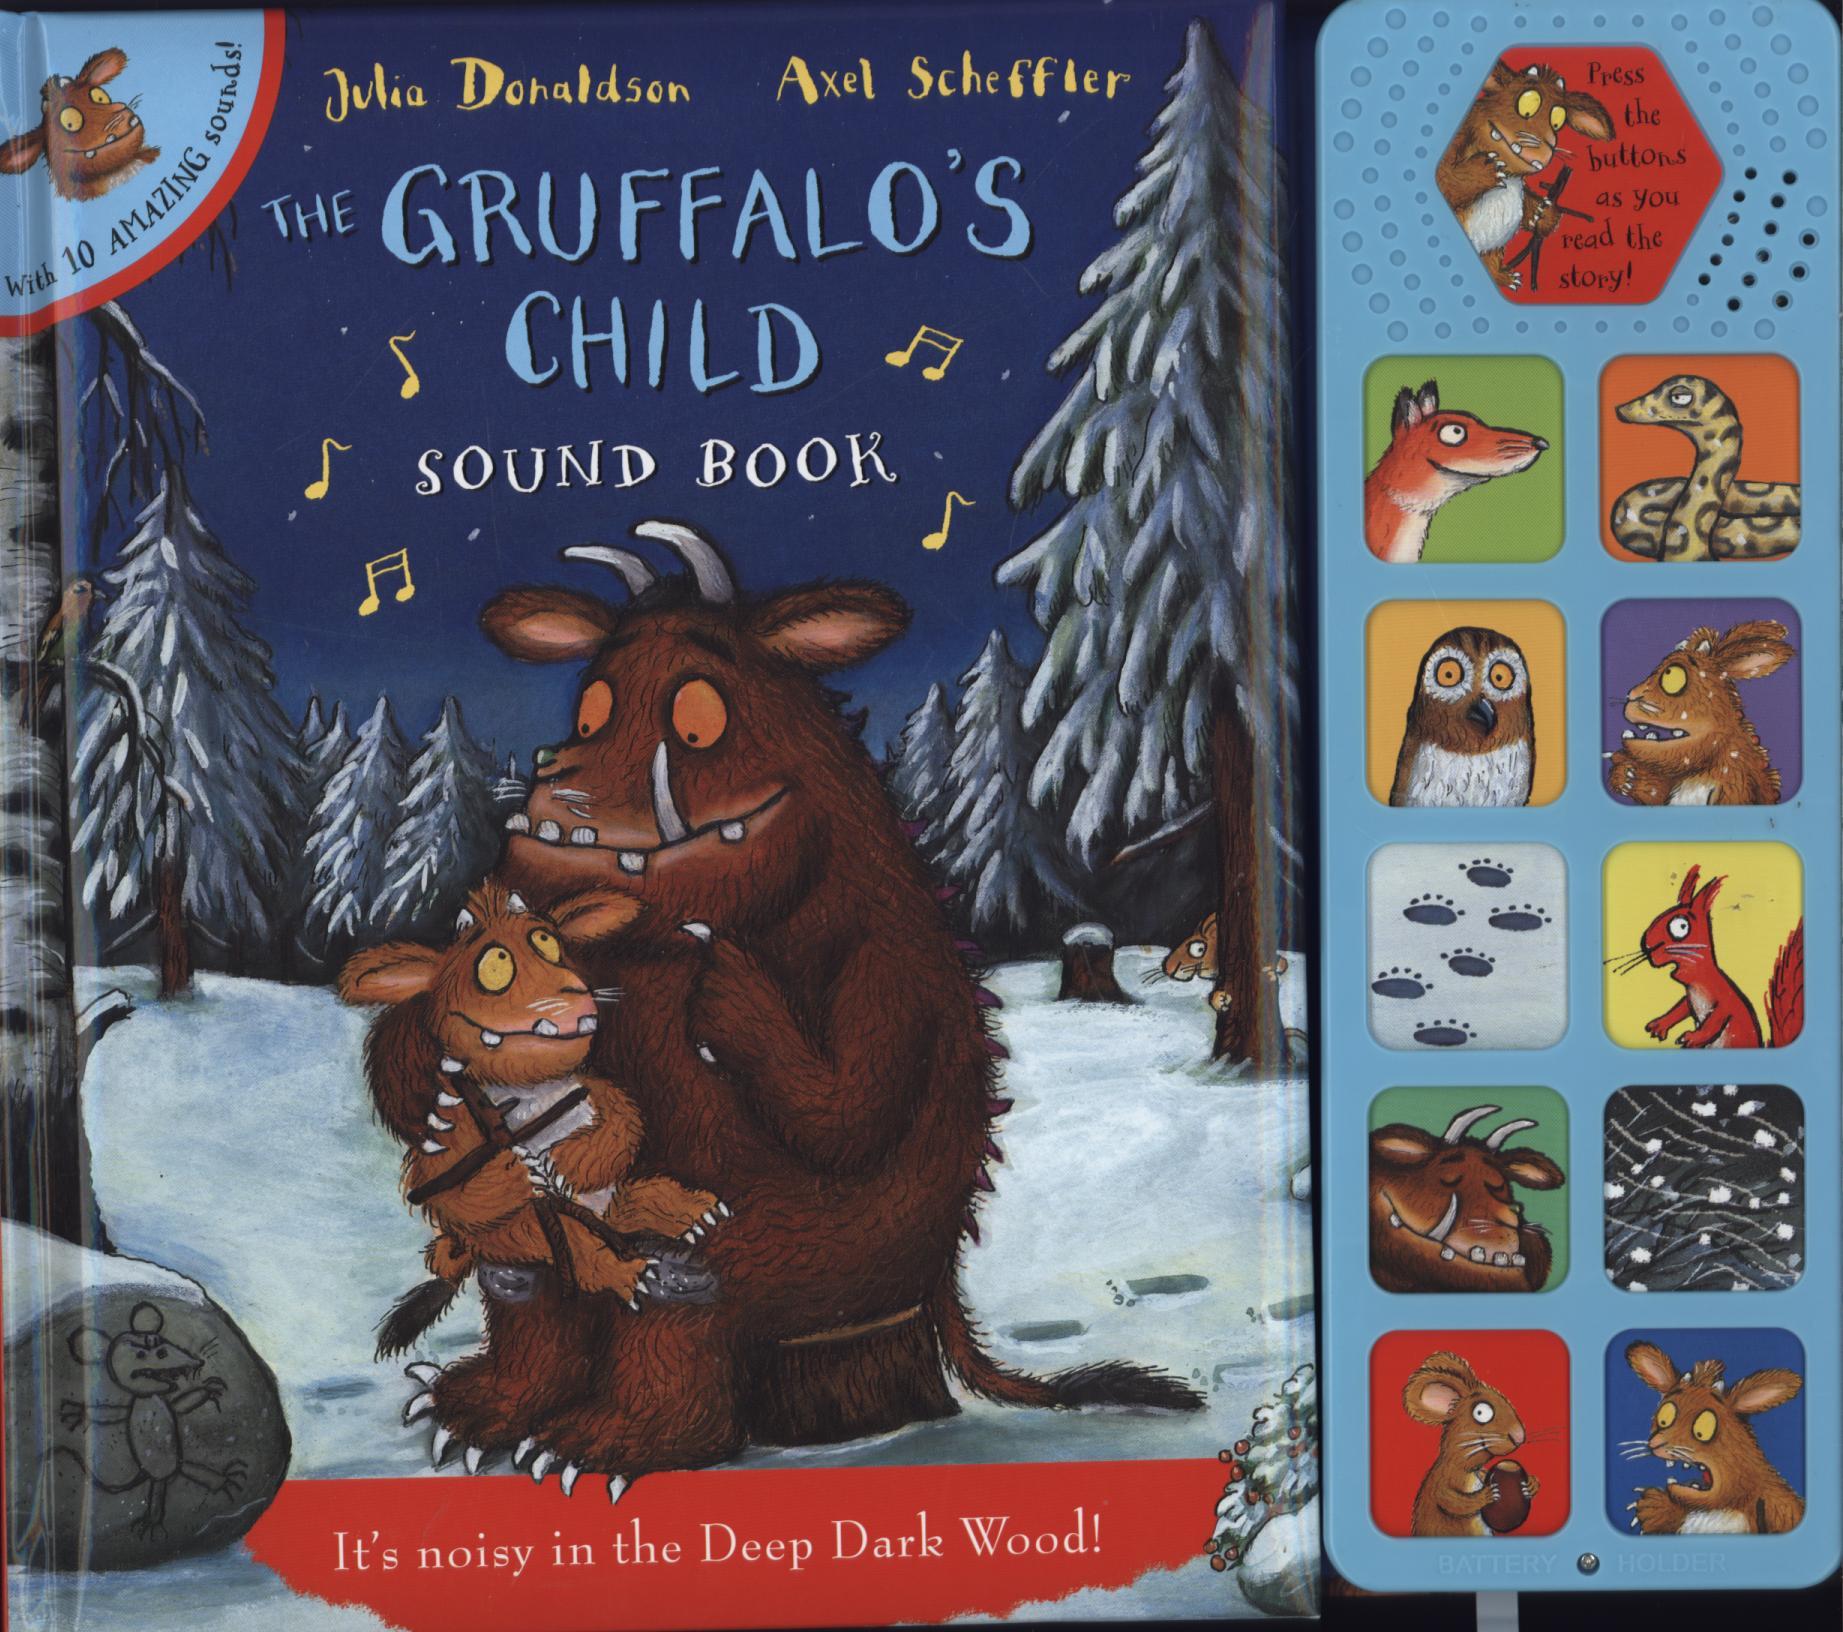 Gruffalo's Child Sound Book